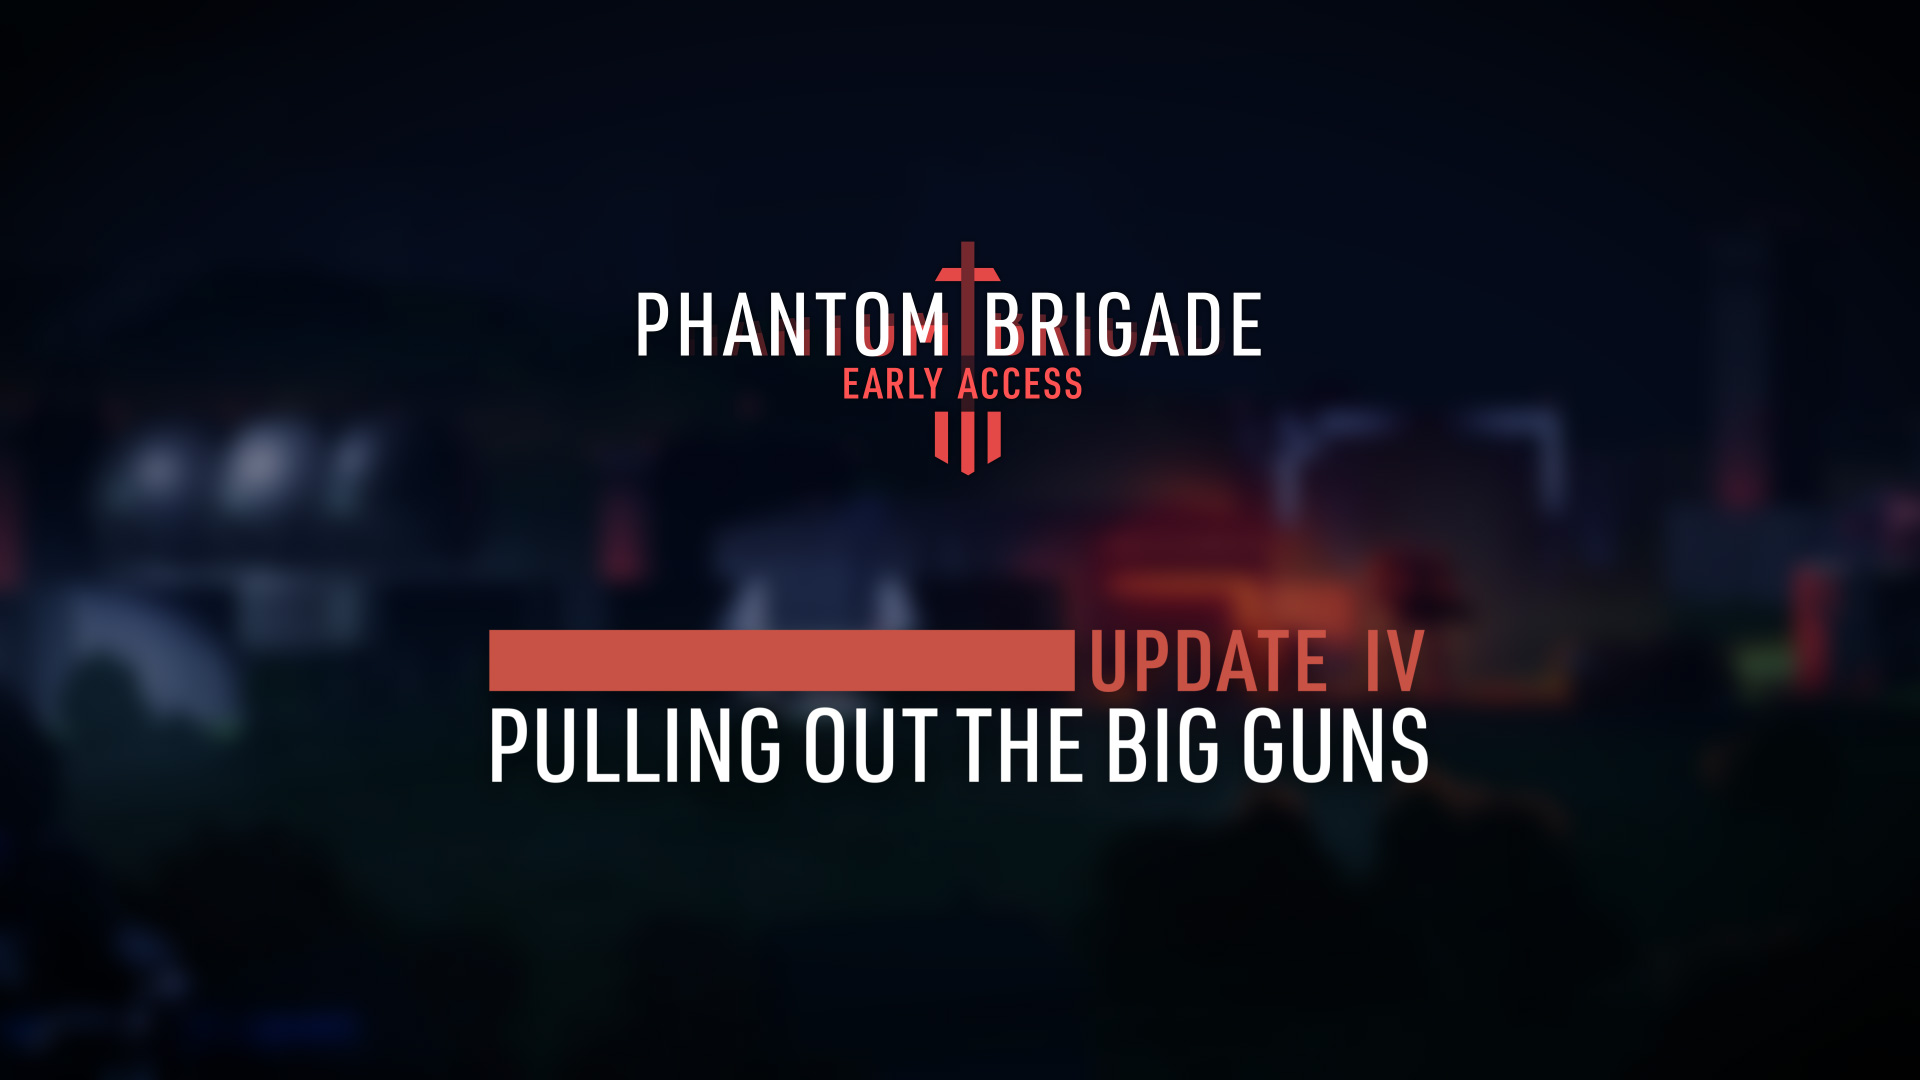 Phantom Brigade Update 4: Pulling Out the Big Guns